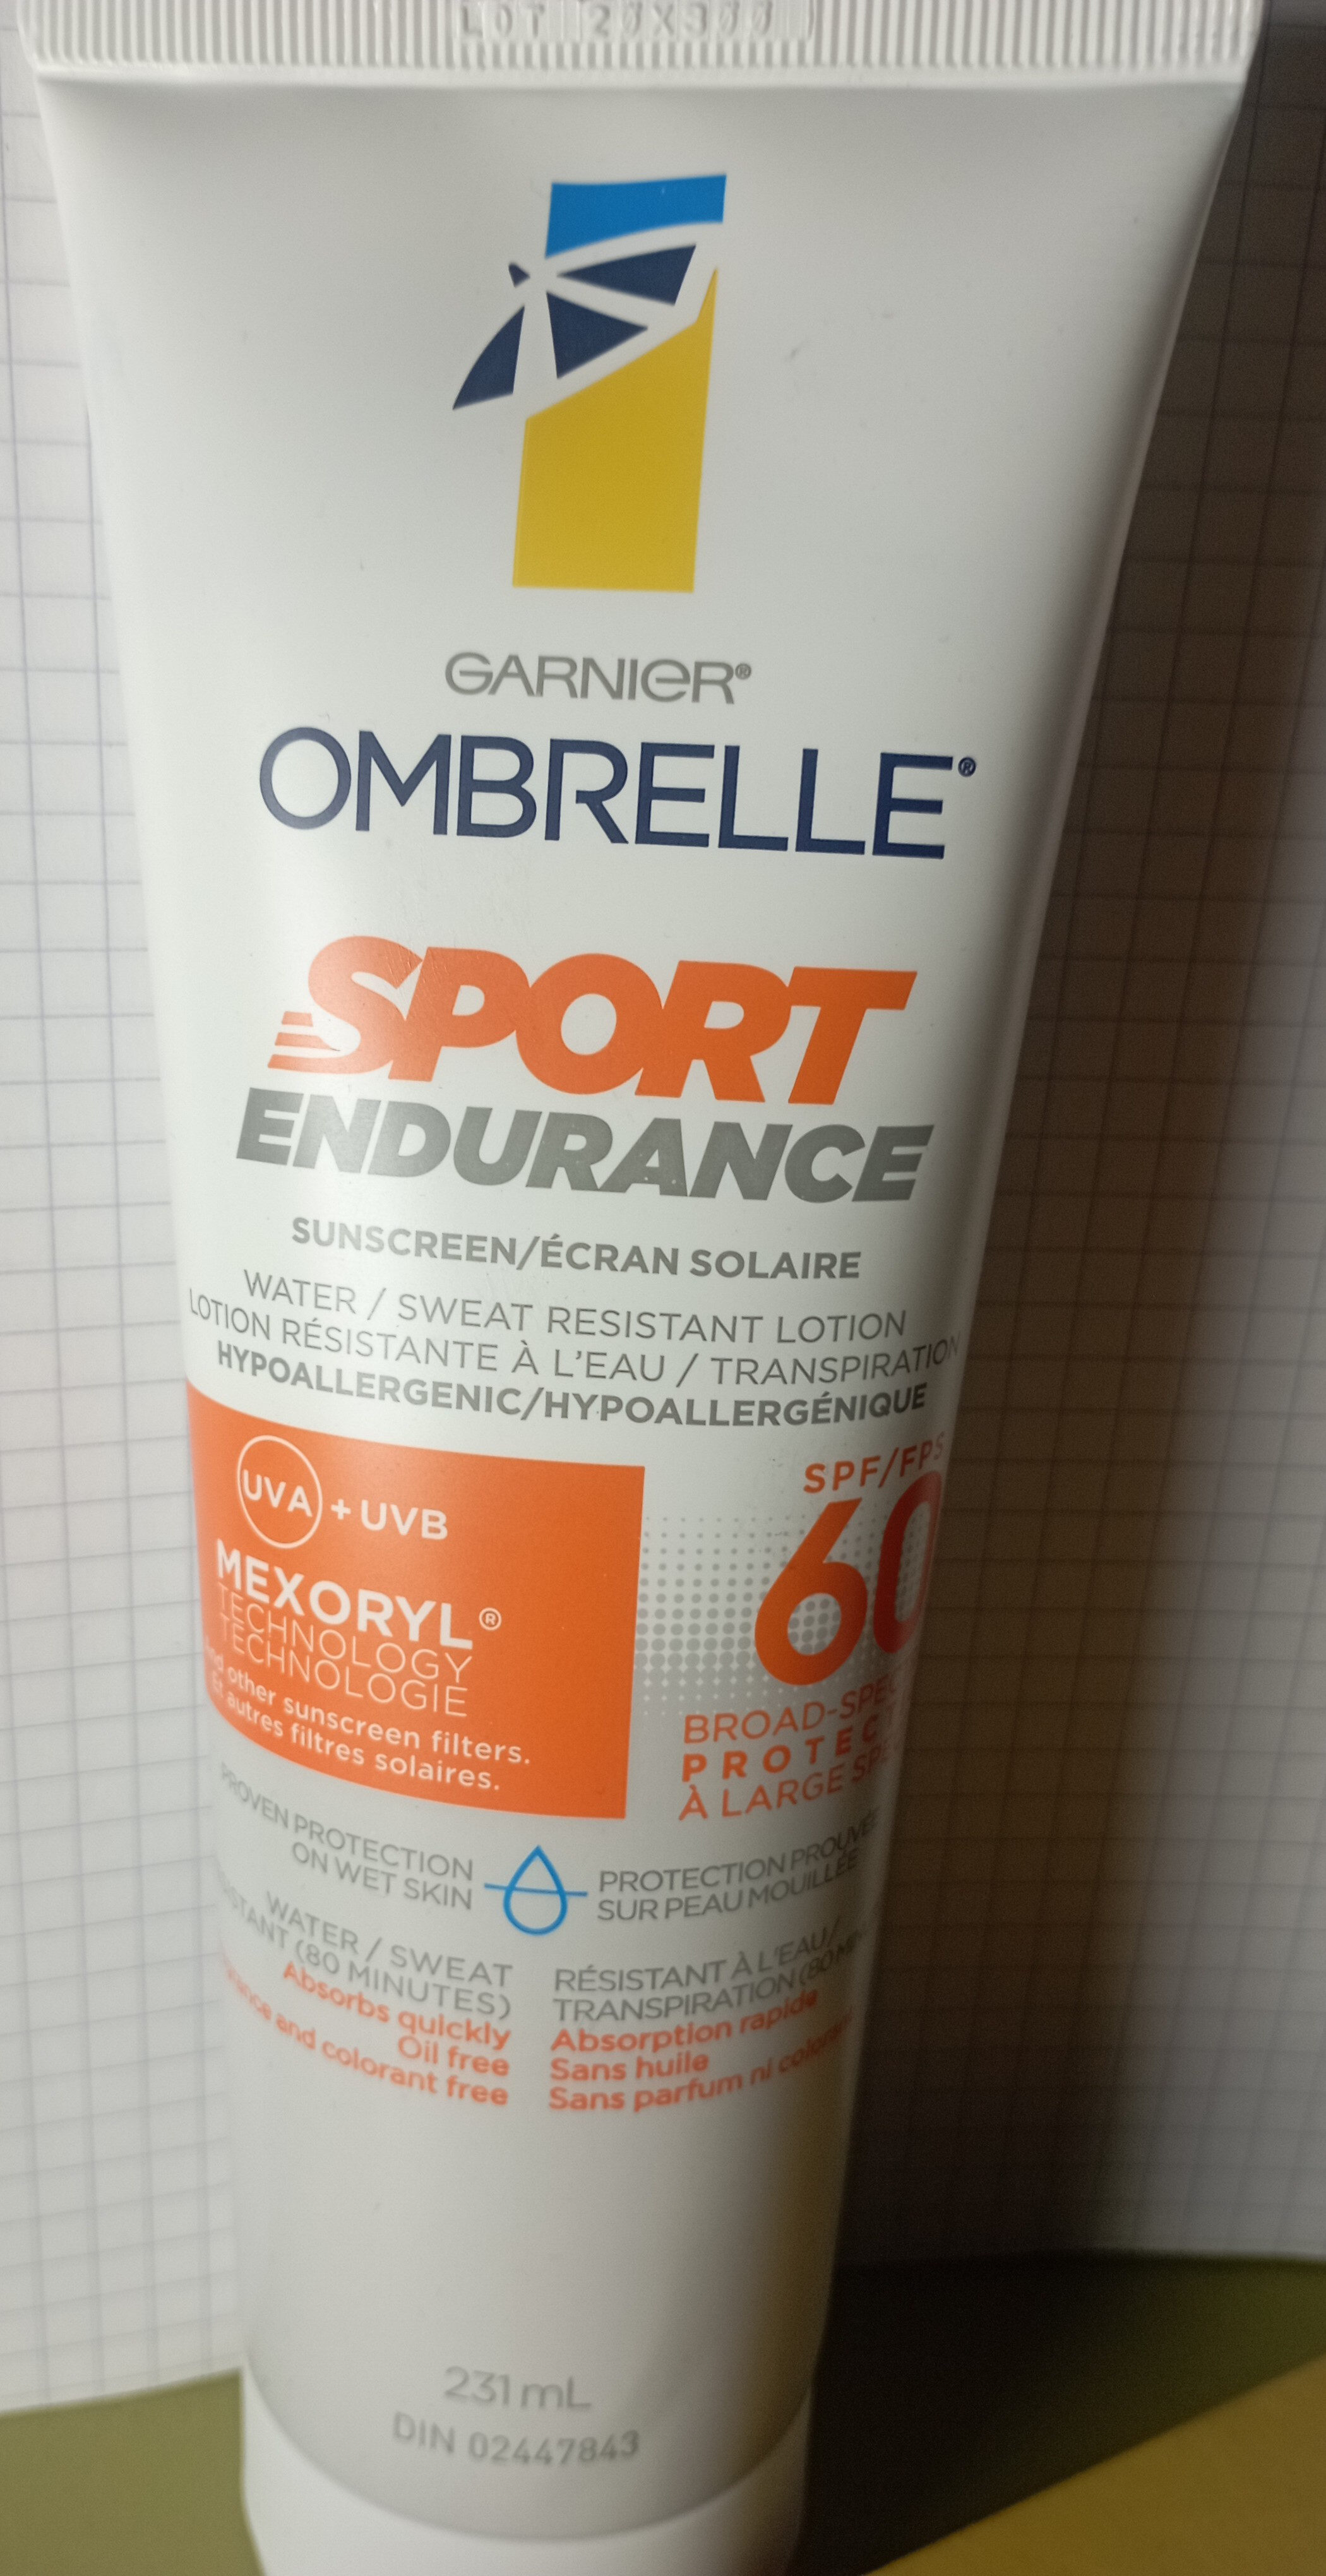 Ombrelle endurance sport - Produit - fr